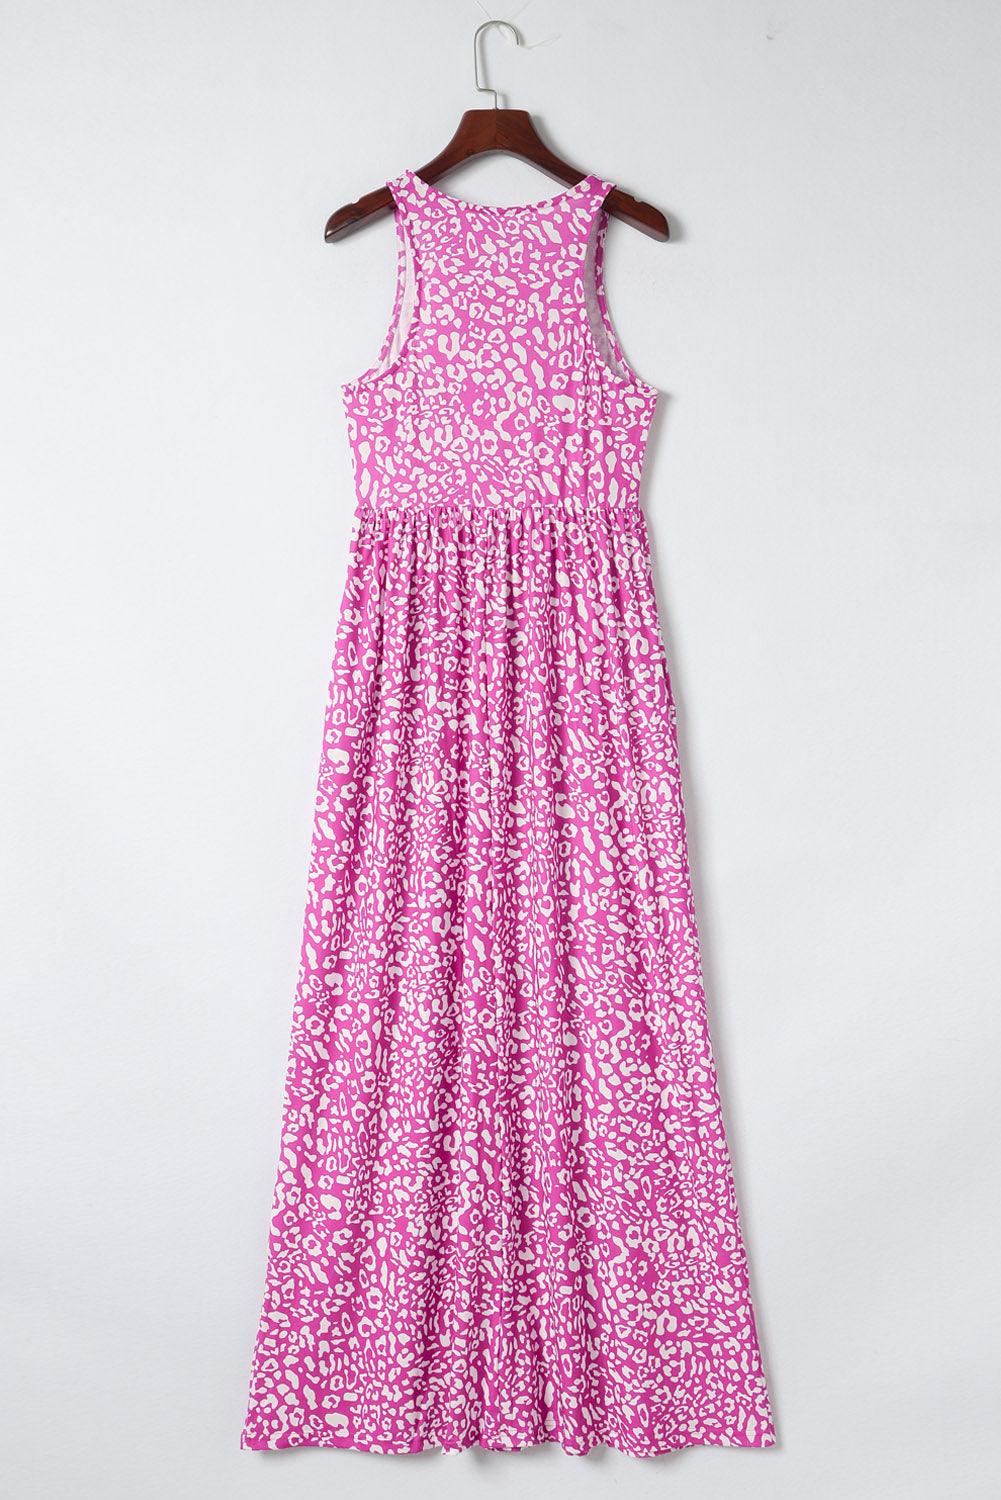 Print Pocketed Sleeveless Pink Maxi Dress Style Sundress